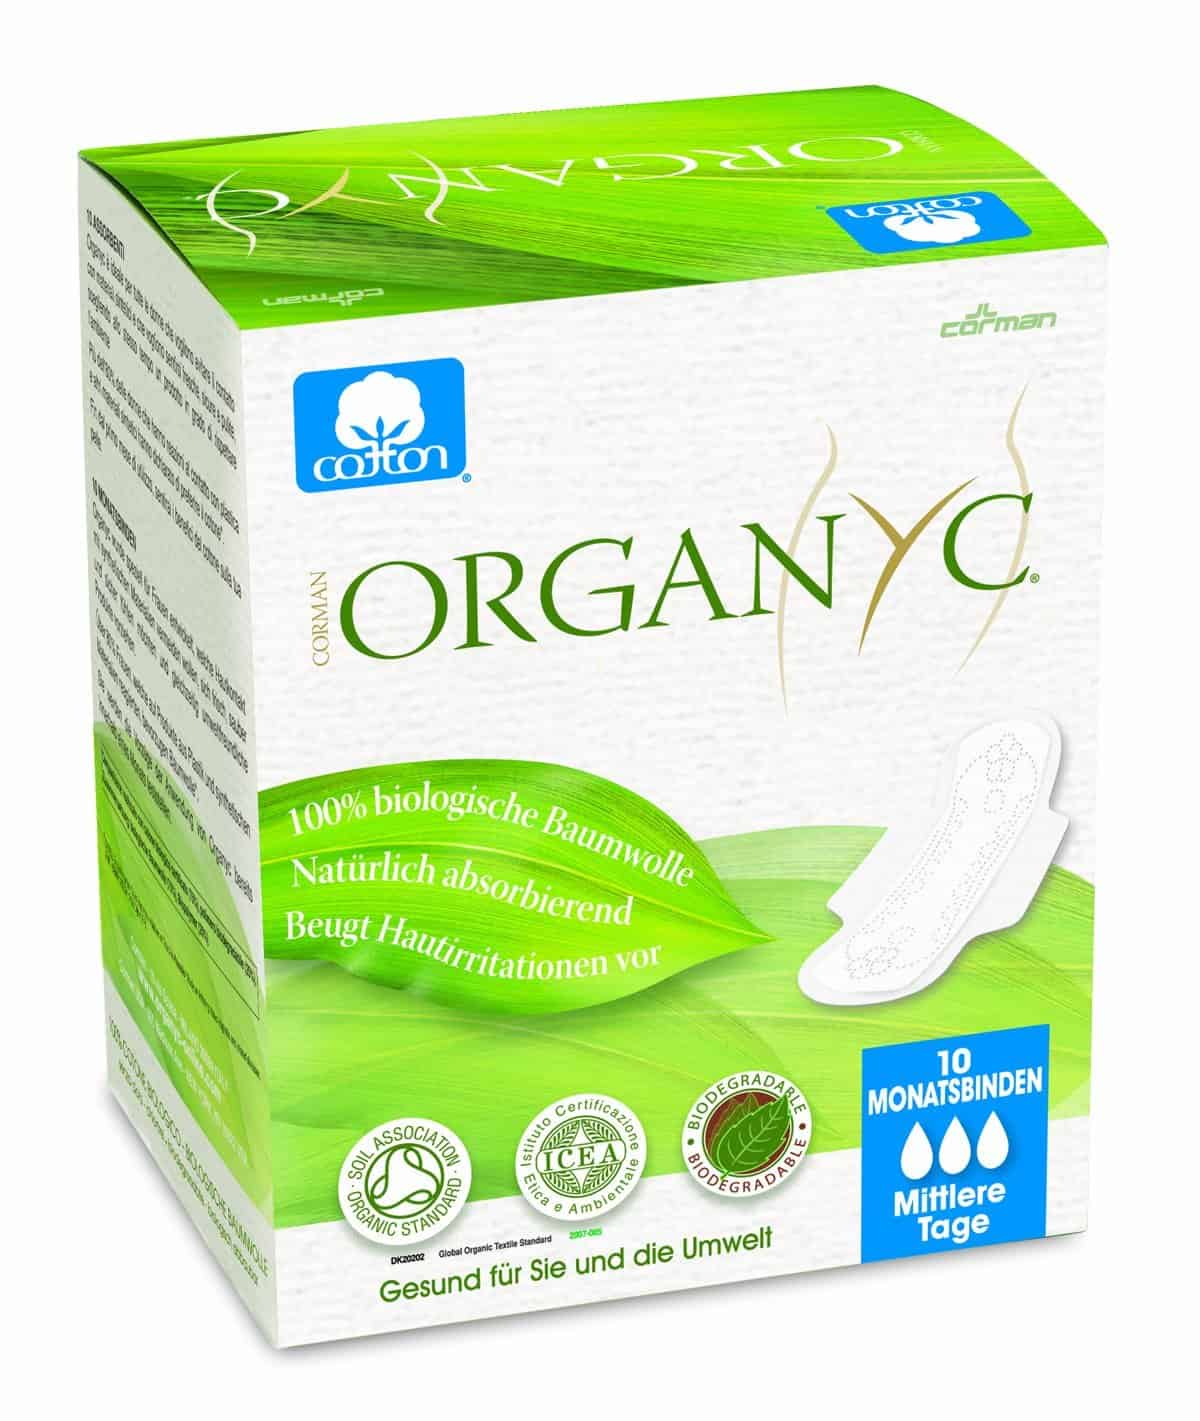 Plastic-free sanitary napkins - Organic sanitary napkins